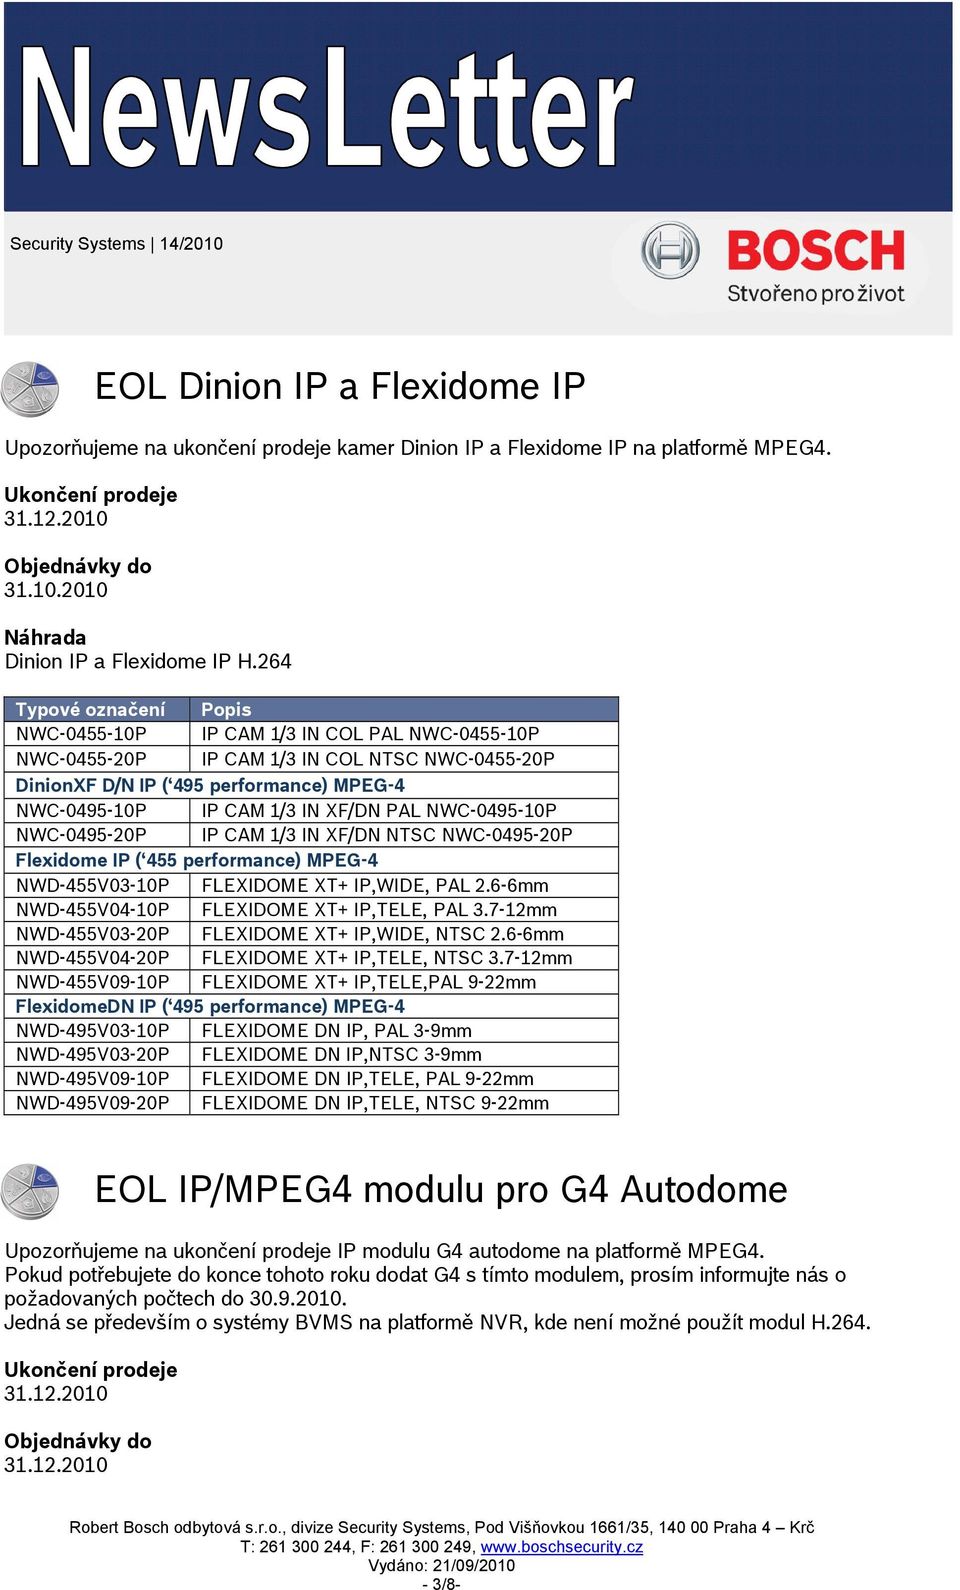 NWC-0495-20P IP CAM 1/3 IN XF/DN NTSC NWC-0495-20P Flexidome IP ( 455 performance) MPEG-4 NWD-455V03-10P FLEXIDOME XT+ IP,WIDE, PAL 2.6-6mm NWD-455V04-10P FLEXIDOME XT+ IP,TELE, PAL 3.